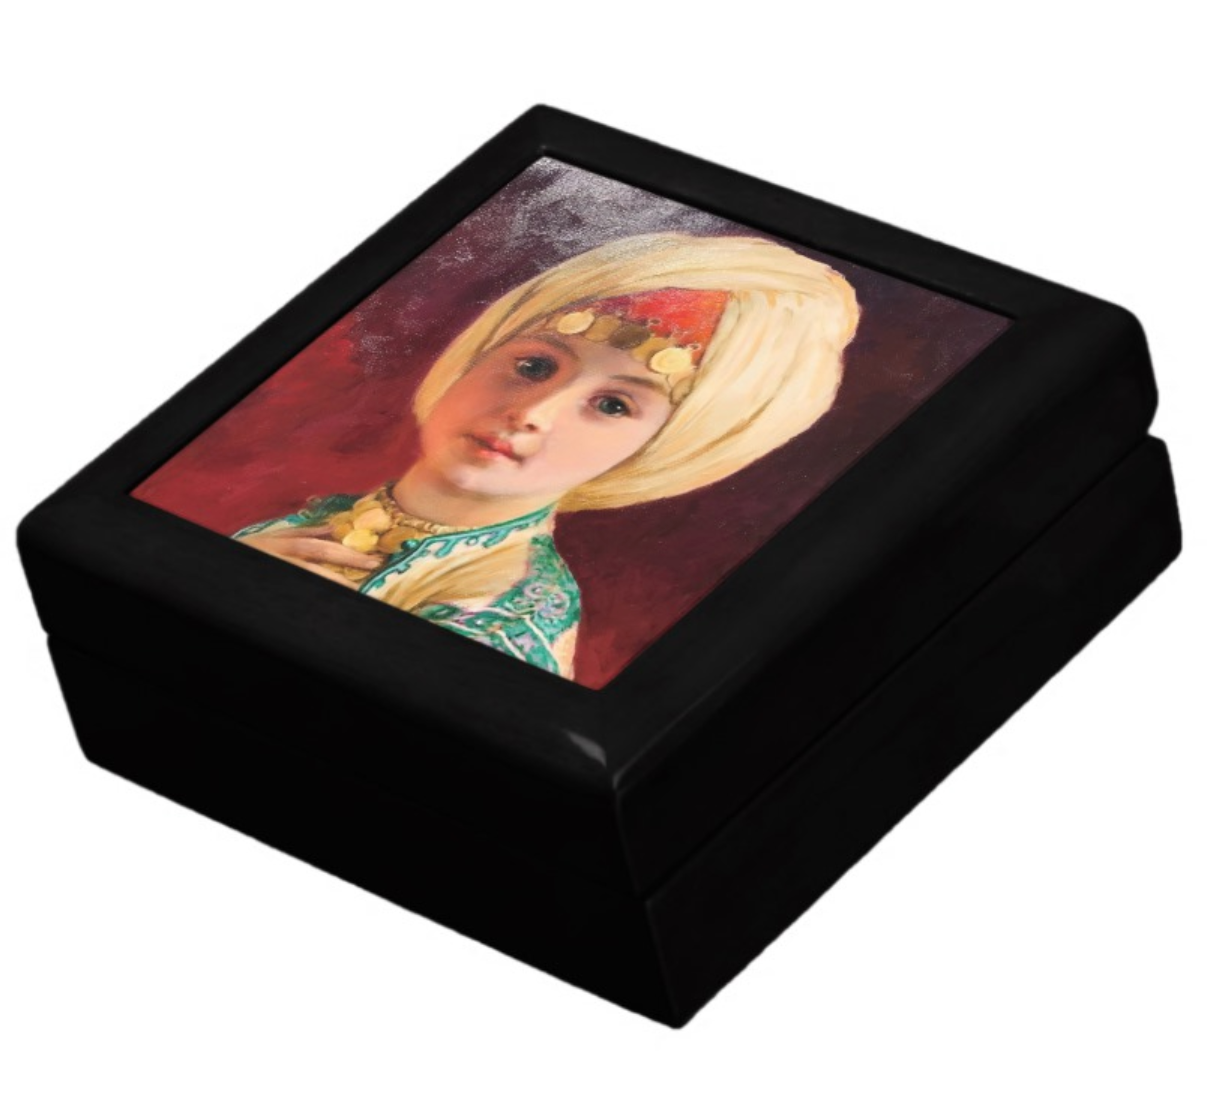 Keepsake/Jewelry Box - Carl Haag Child with Turban - Lacquer Box Black Wood